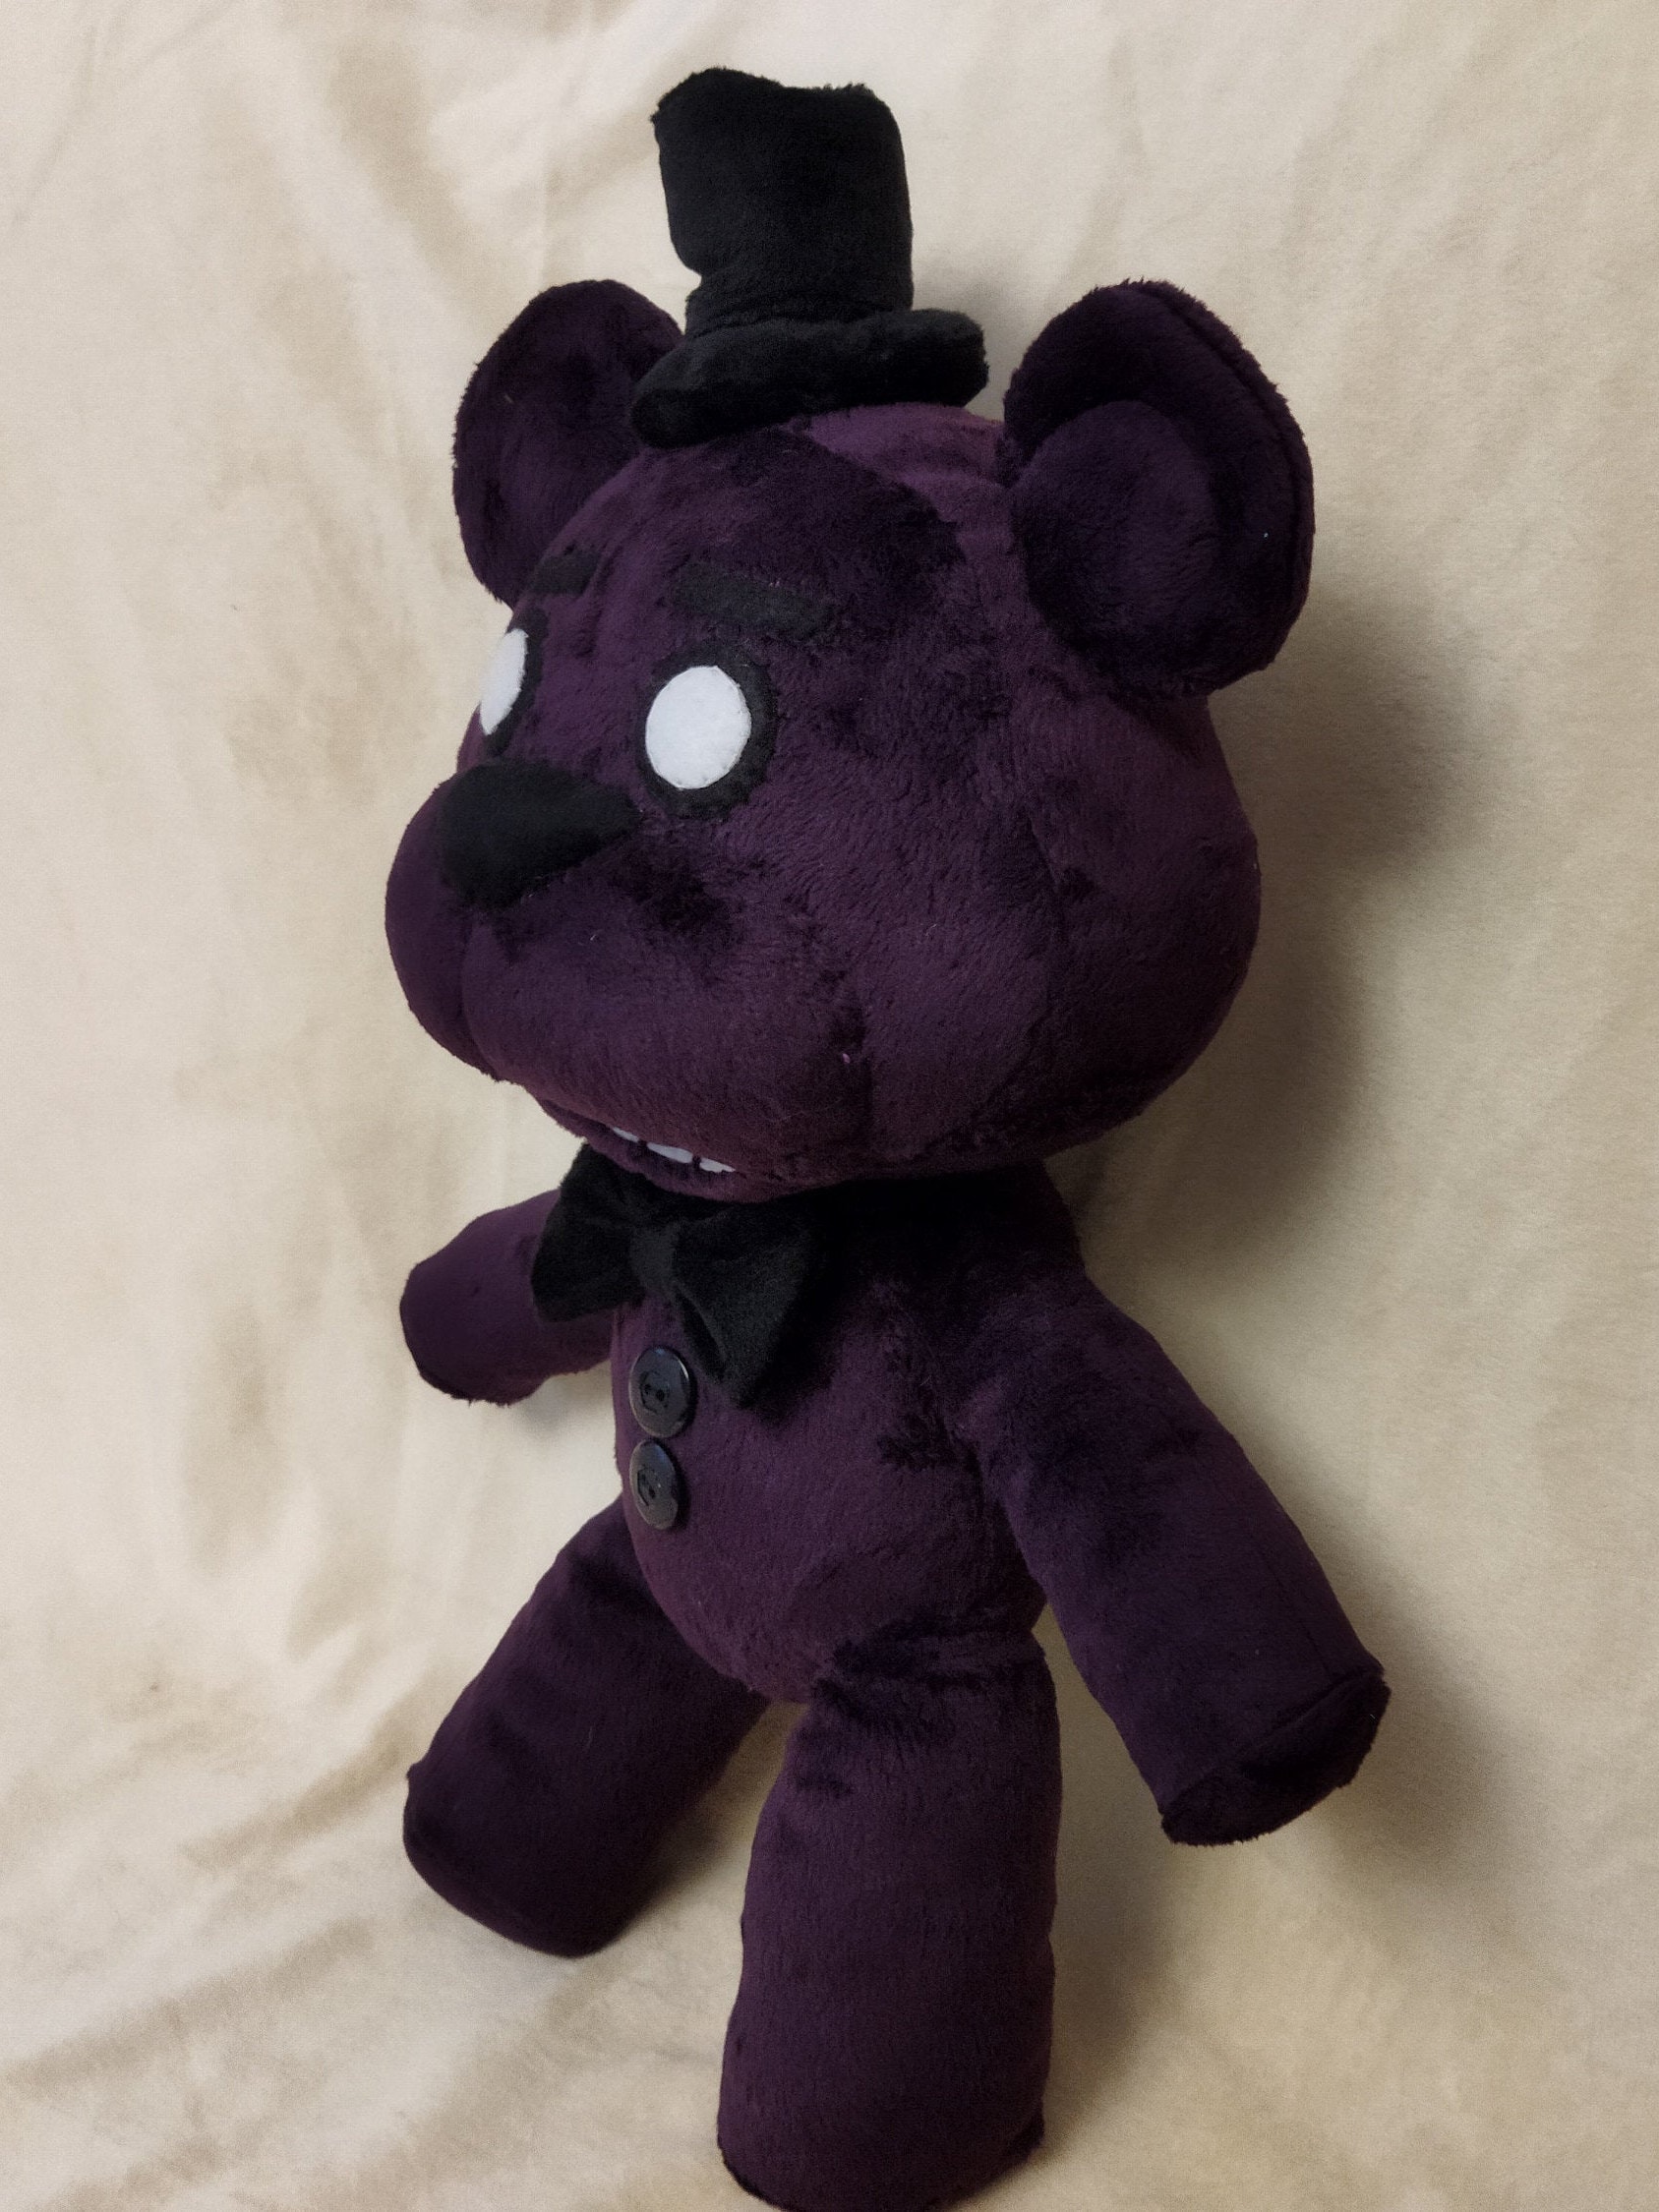  Laruokivi FNAF Shadow Freddy Plush Toy 7'' Figure Purple : Toys  & Games